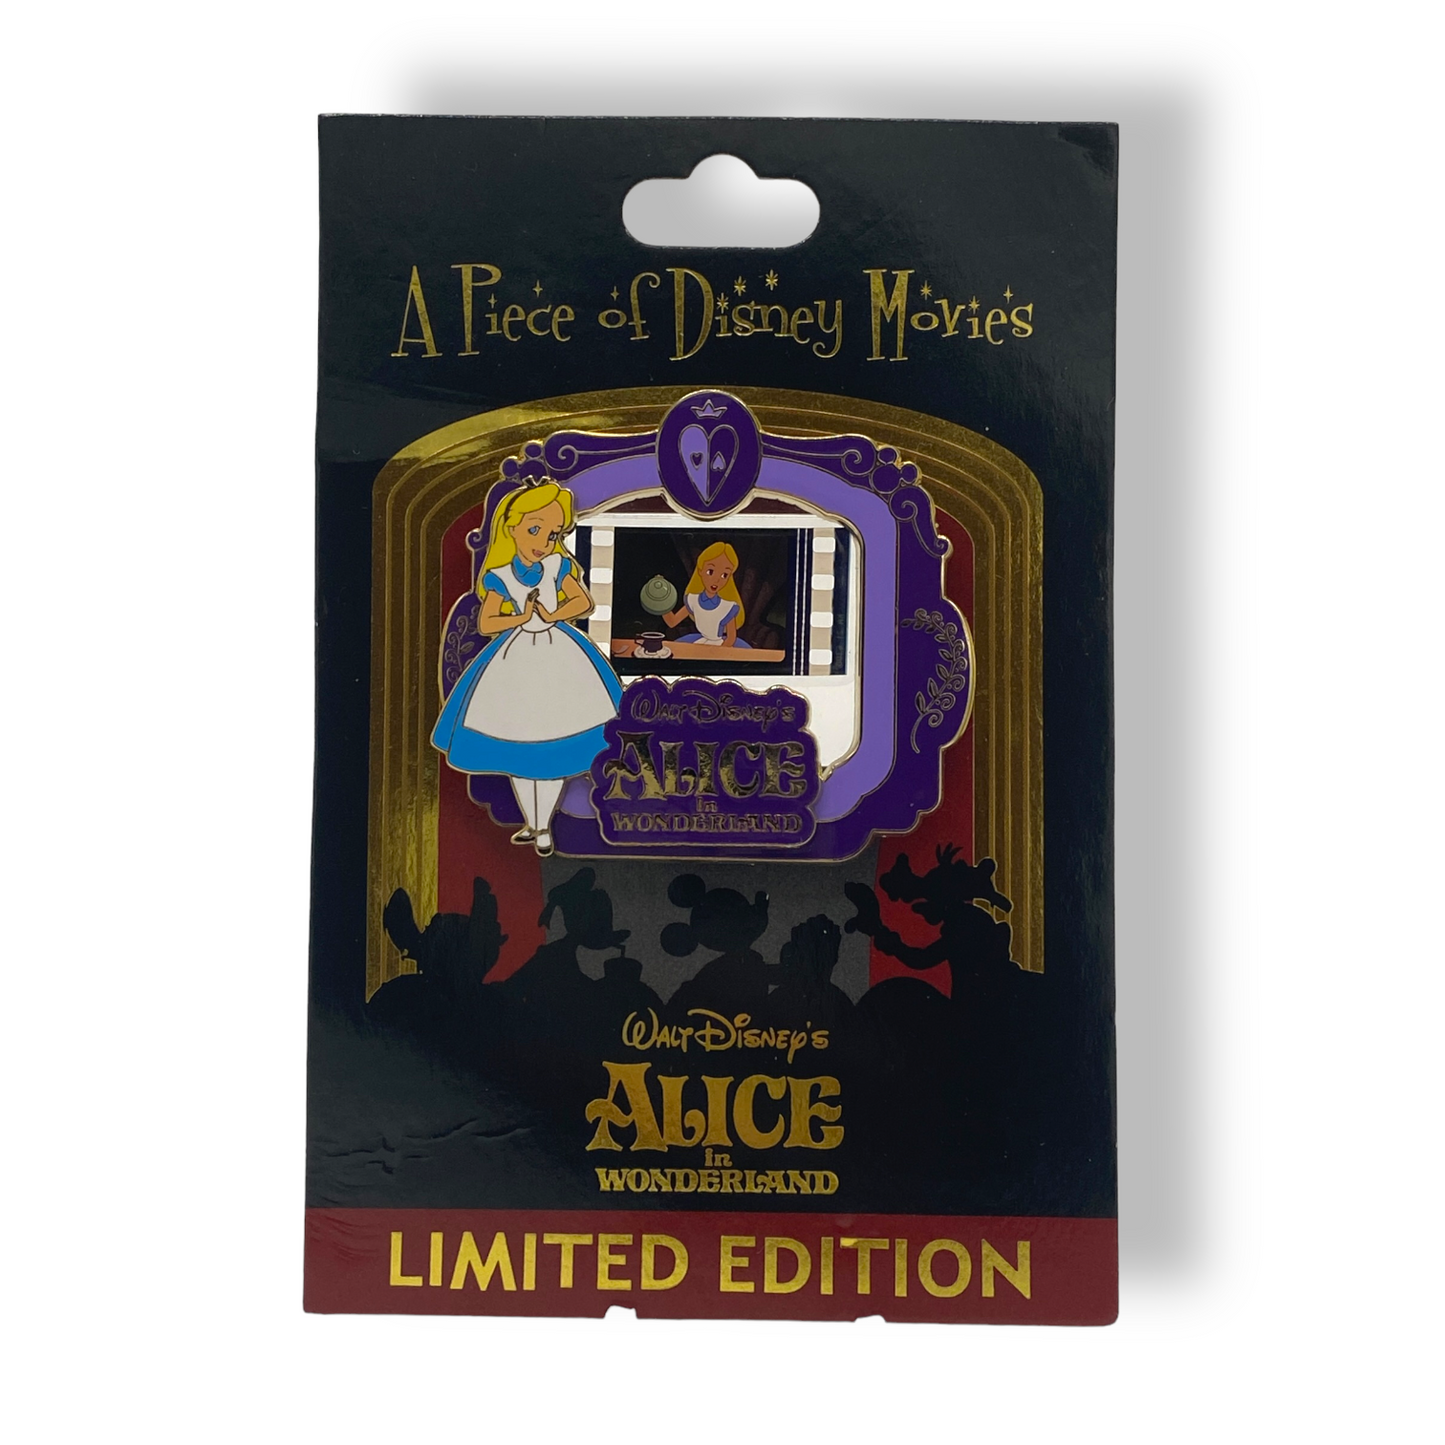 Piece of Disney Movies Alice in Wonderland Pin